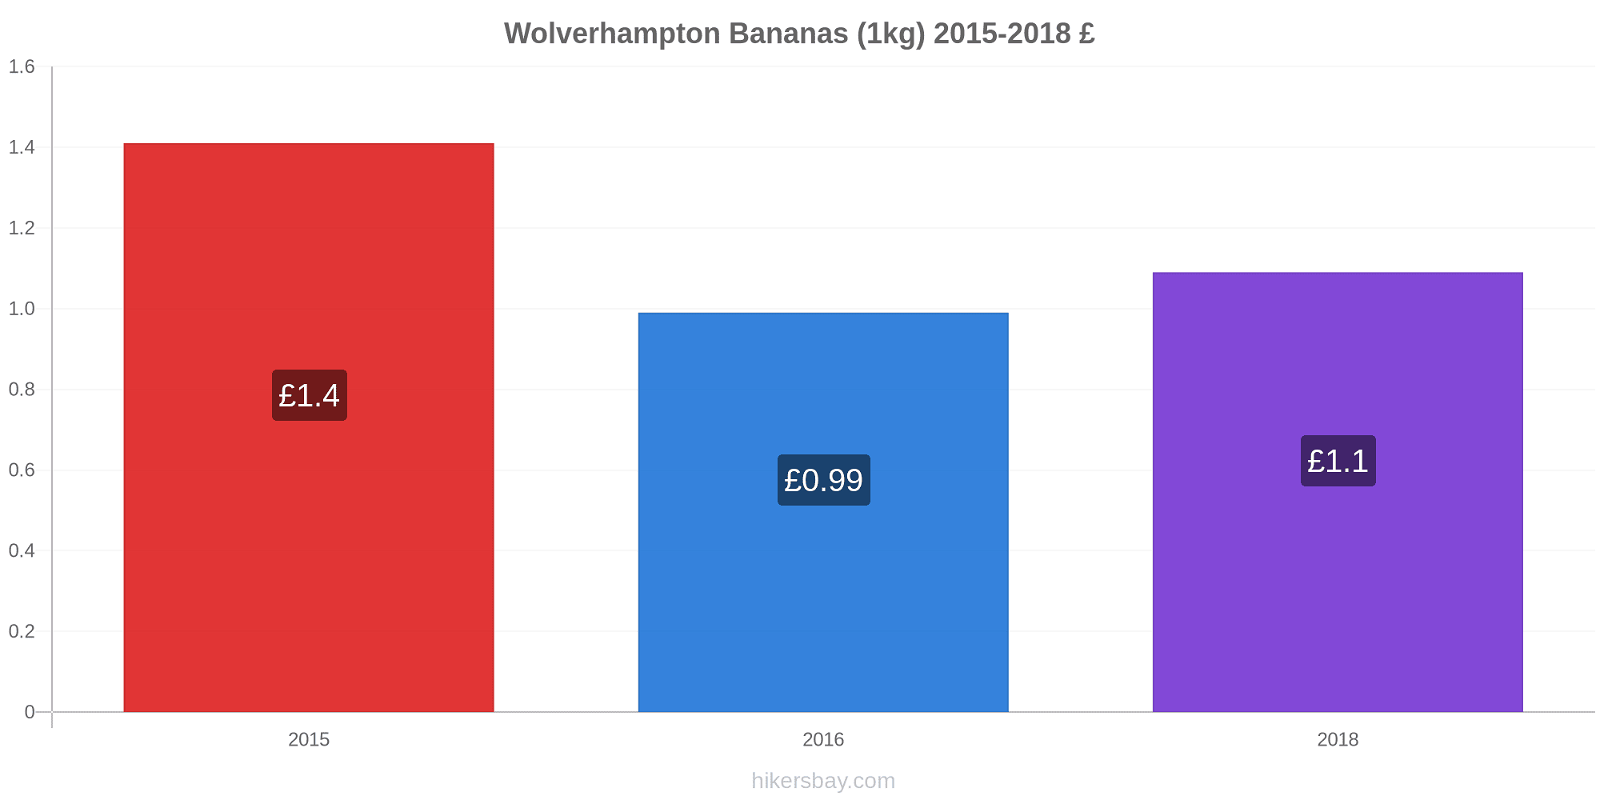 Wolverhampton price changes Bananas (1kg) hikersbay.com